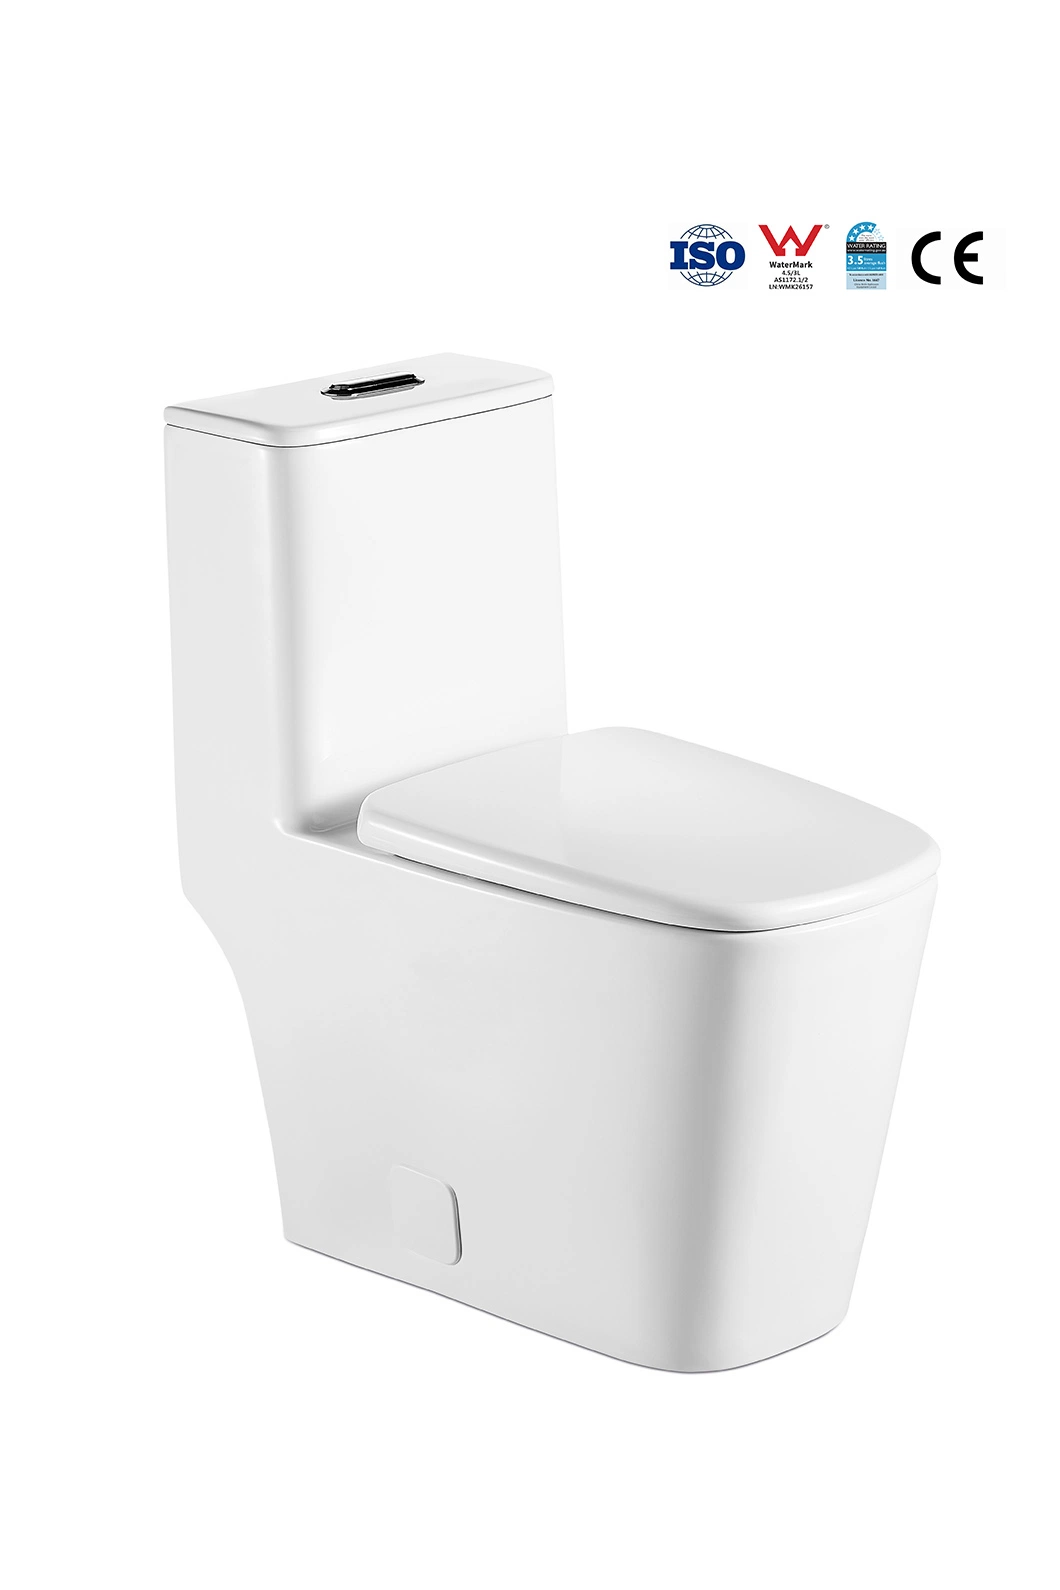 Wholesale Floor Mounted Water Closet Modern Design S Trap Siphon Flushing One Piece Wc Toilet Upflush Toilet